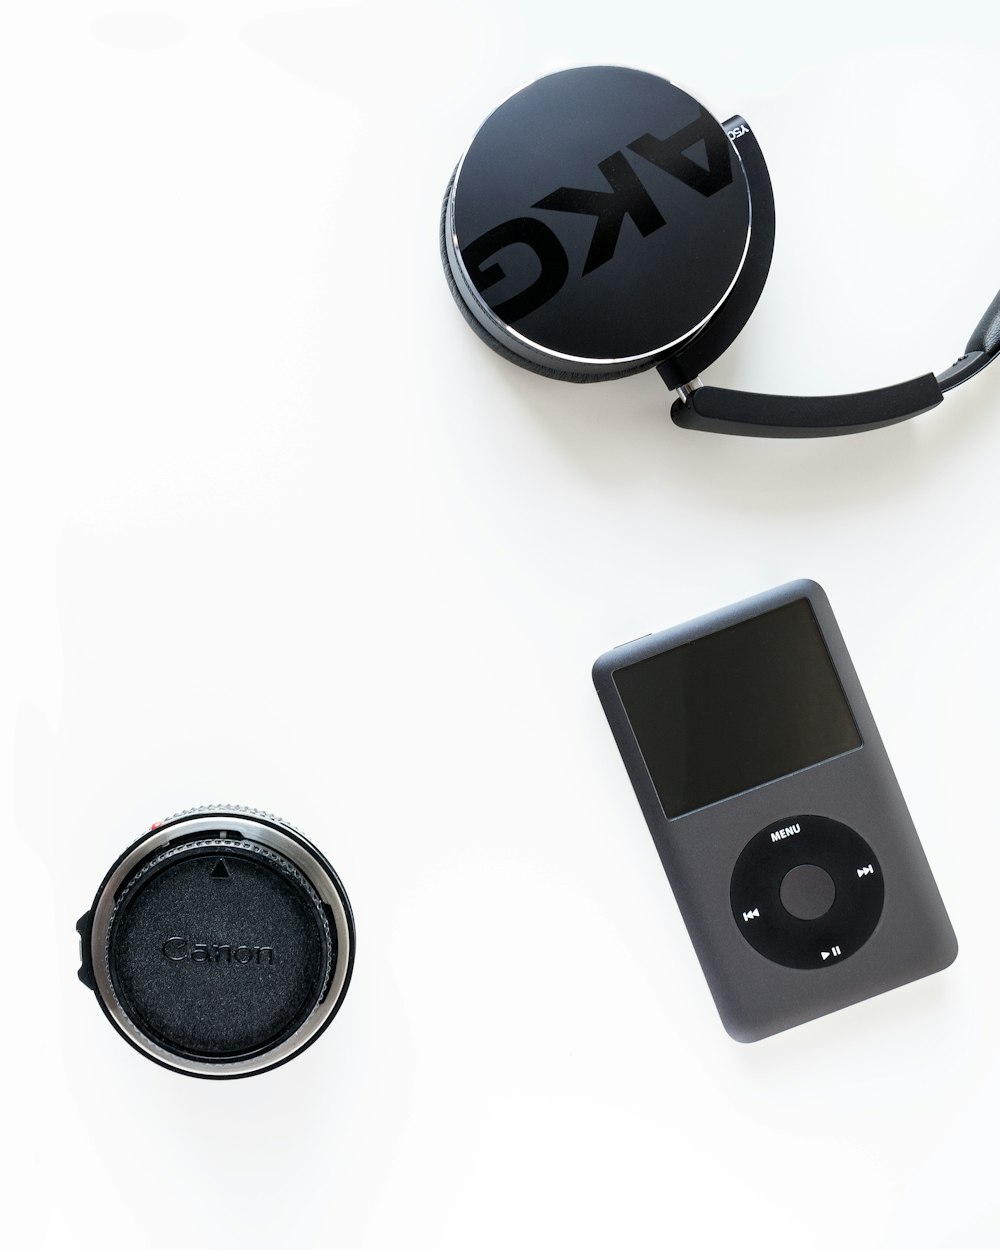 black iPod classic beside black Canon camera lens